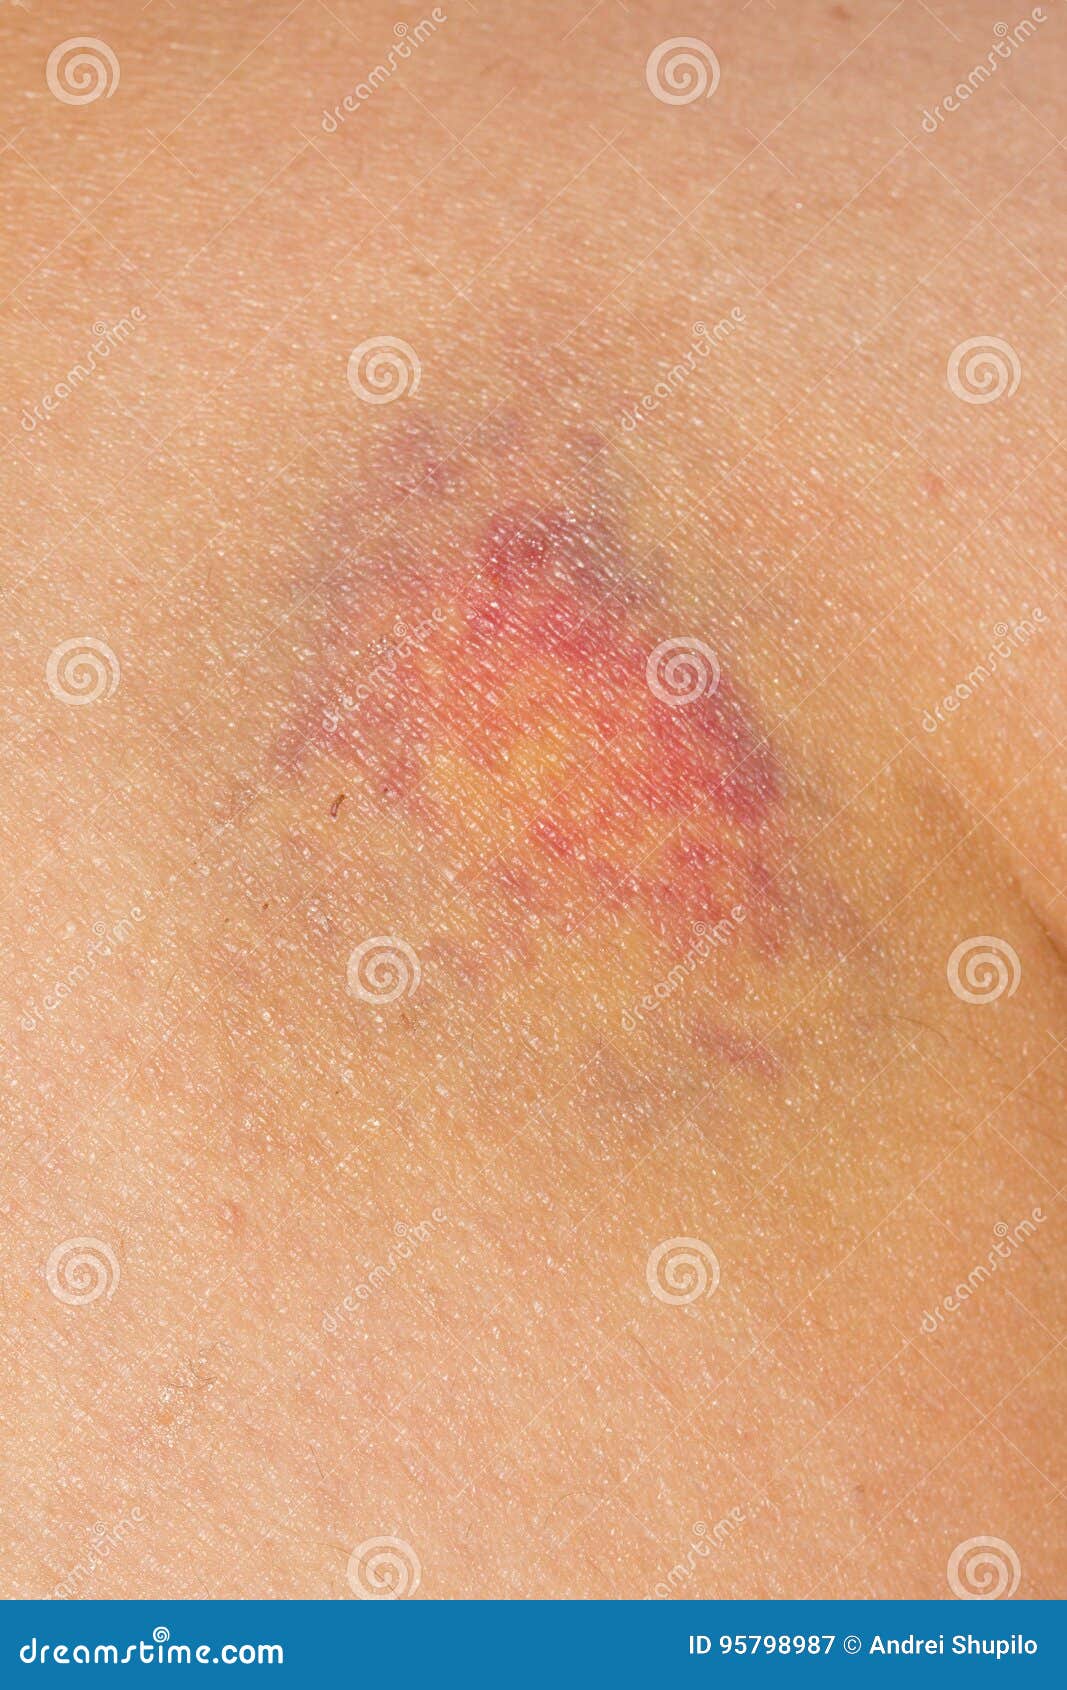 Nasty Looking Bruise On Hip Macro Shot Stock Image Image Of Surface